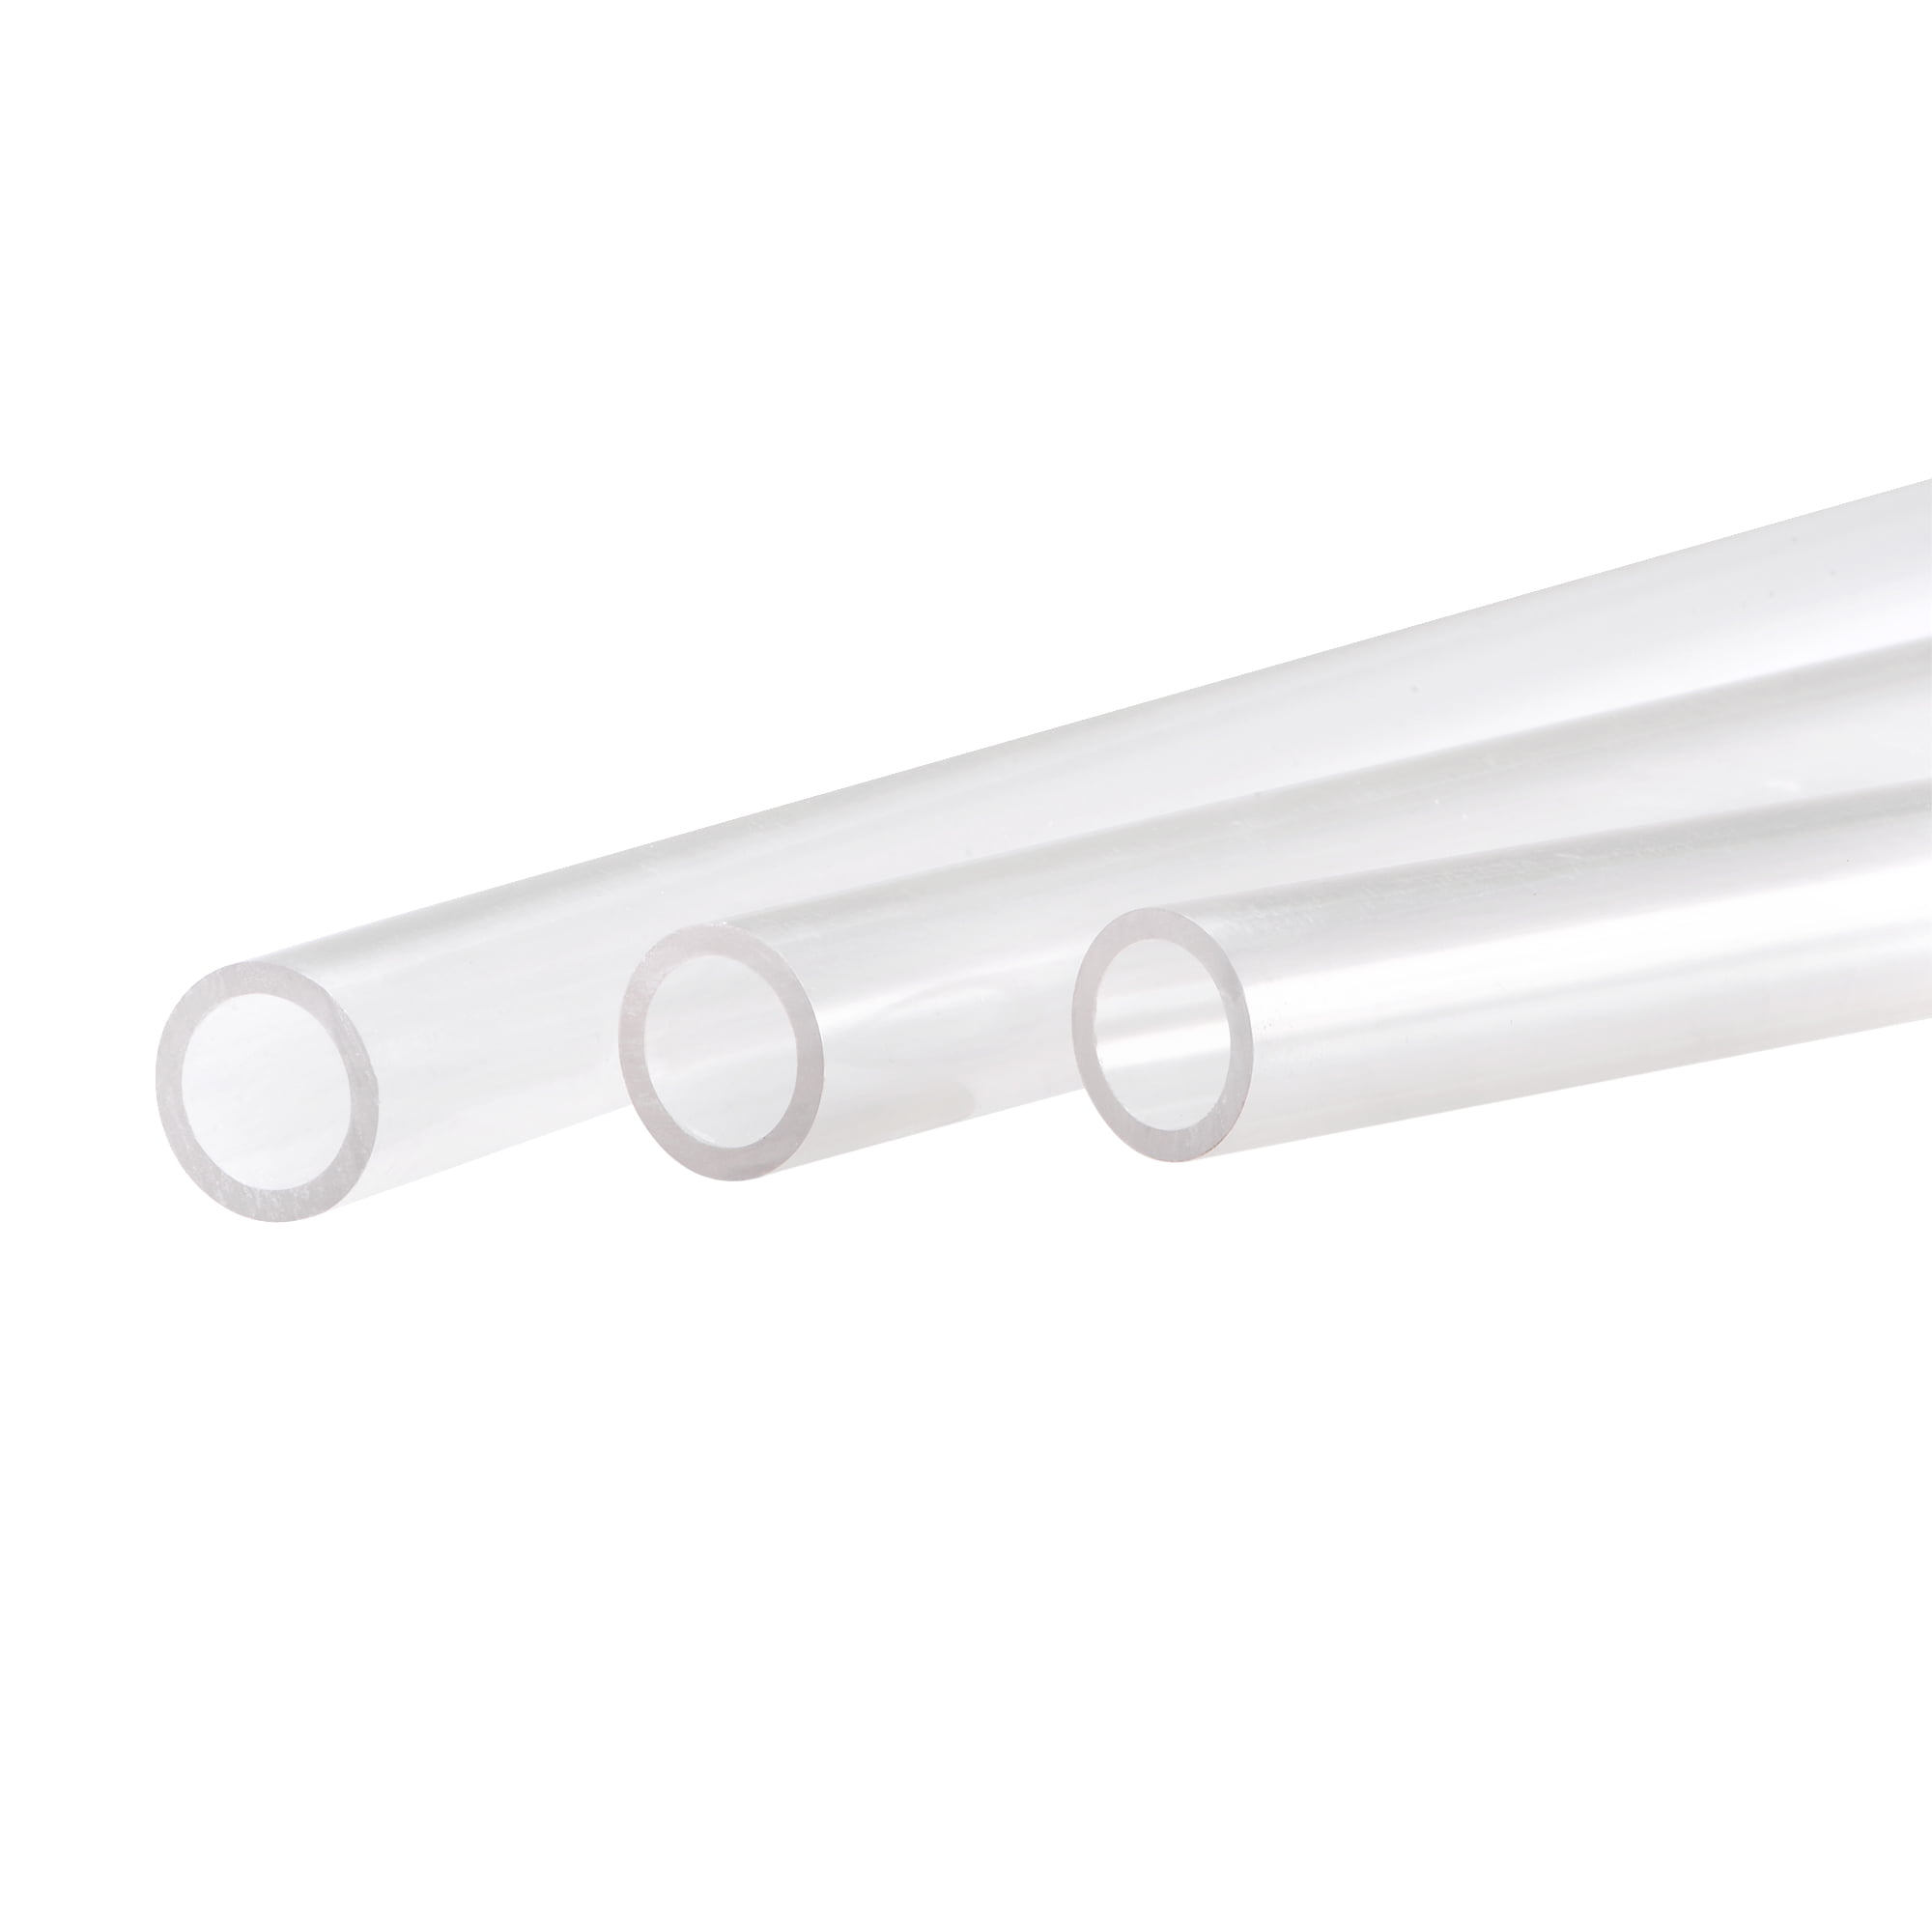 0.5m uxcell 2pcs PVC Rigid Round Clear Tubing Plastic Flexible Water Pipe 23mm ID x 25mm OD